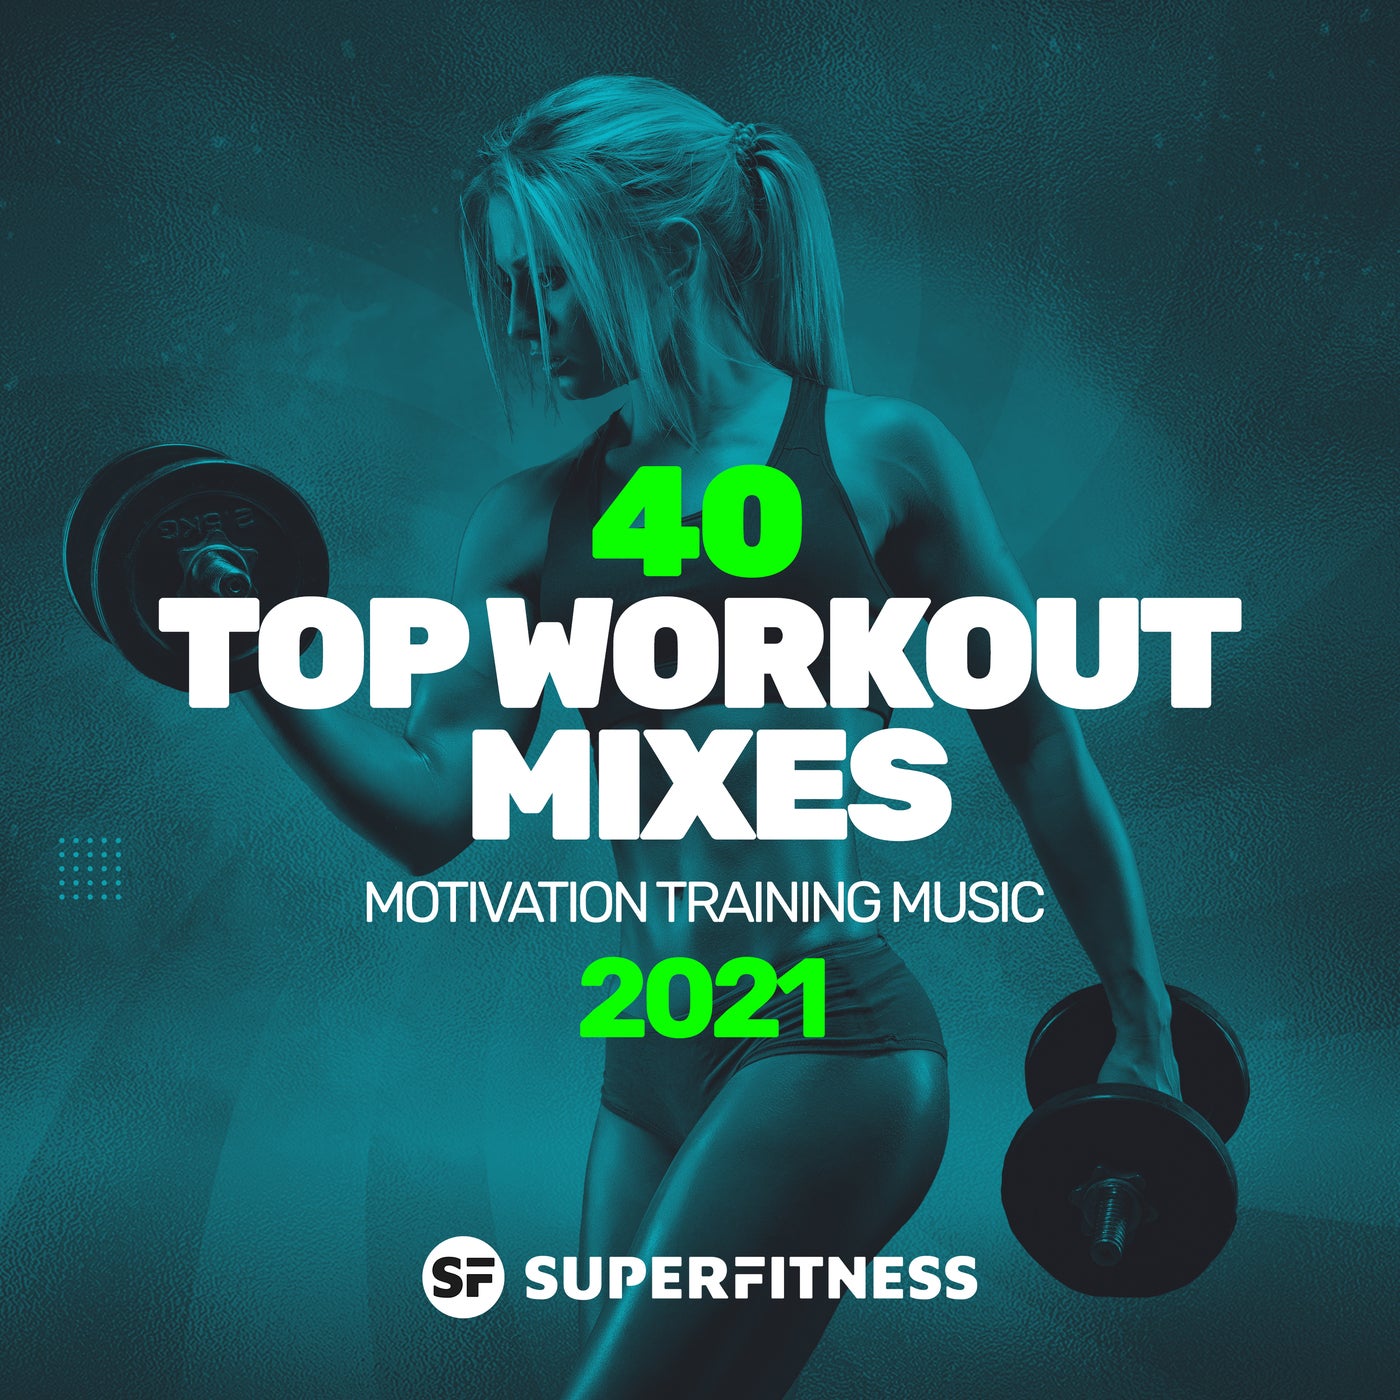 40 Top Workout Mixes 2021: Motivation Training Music